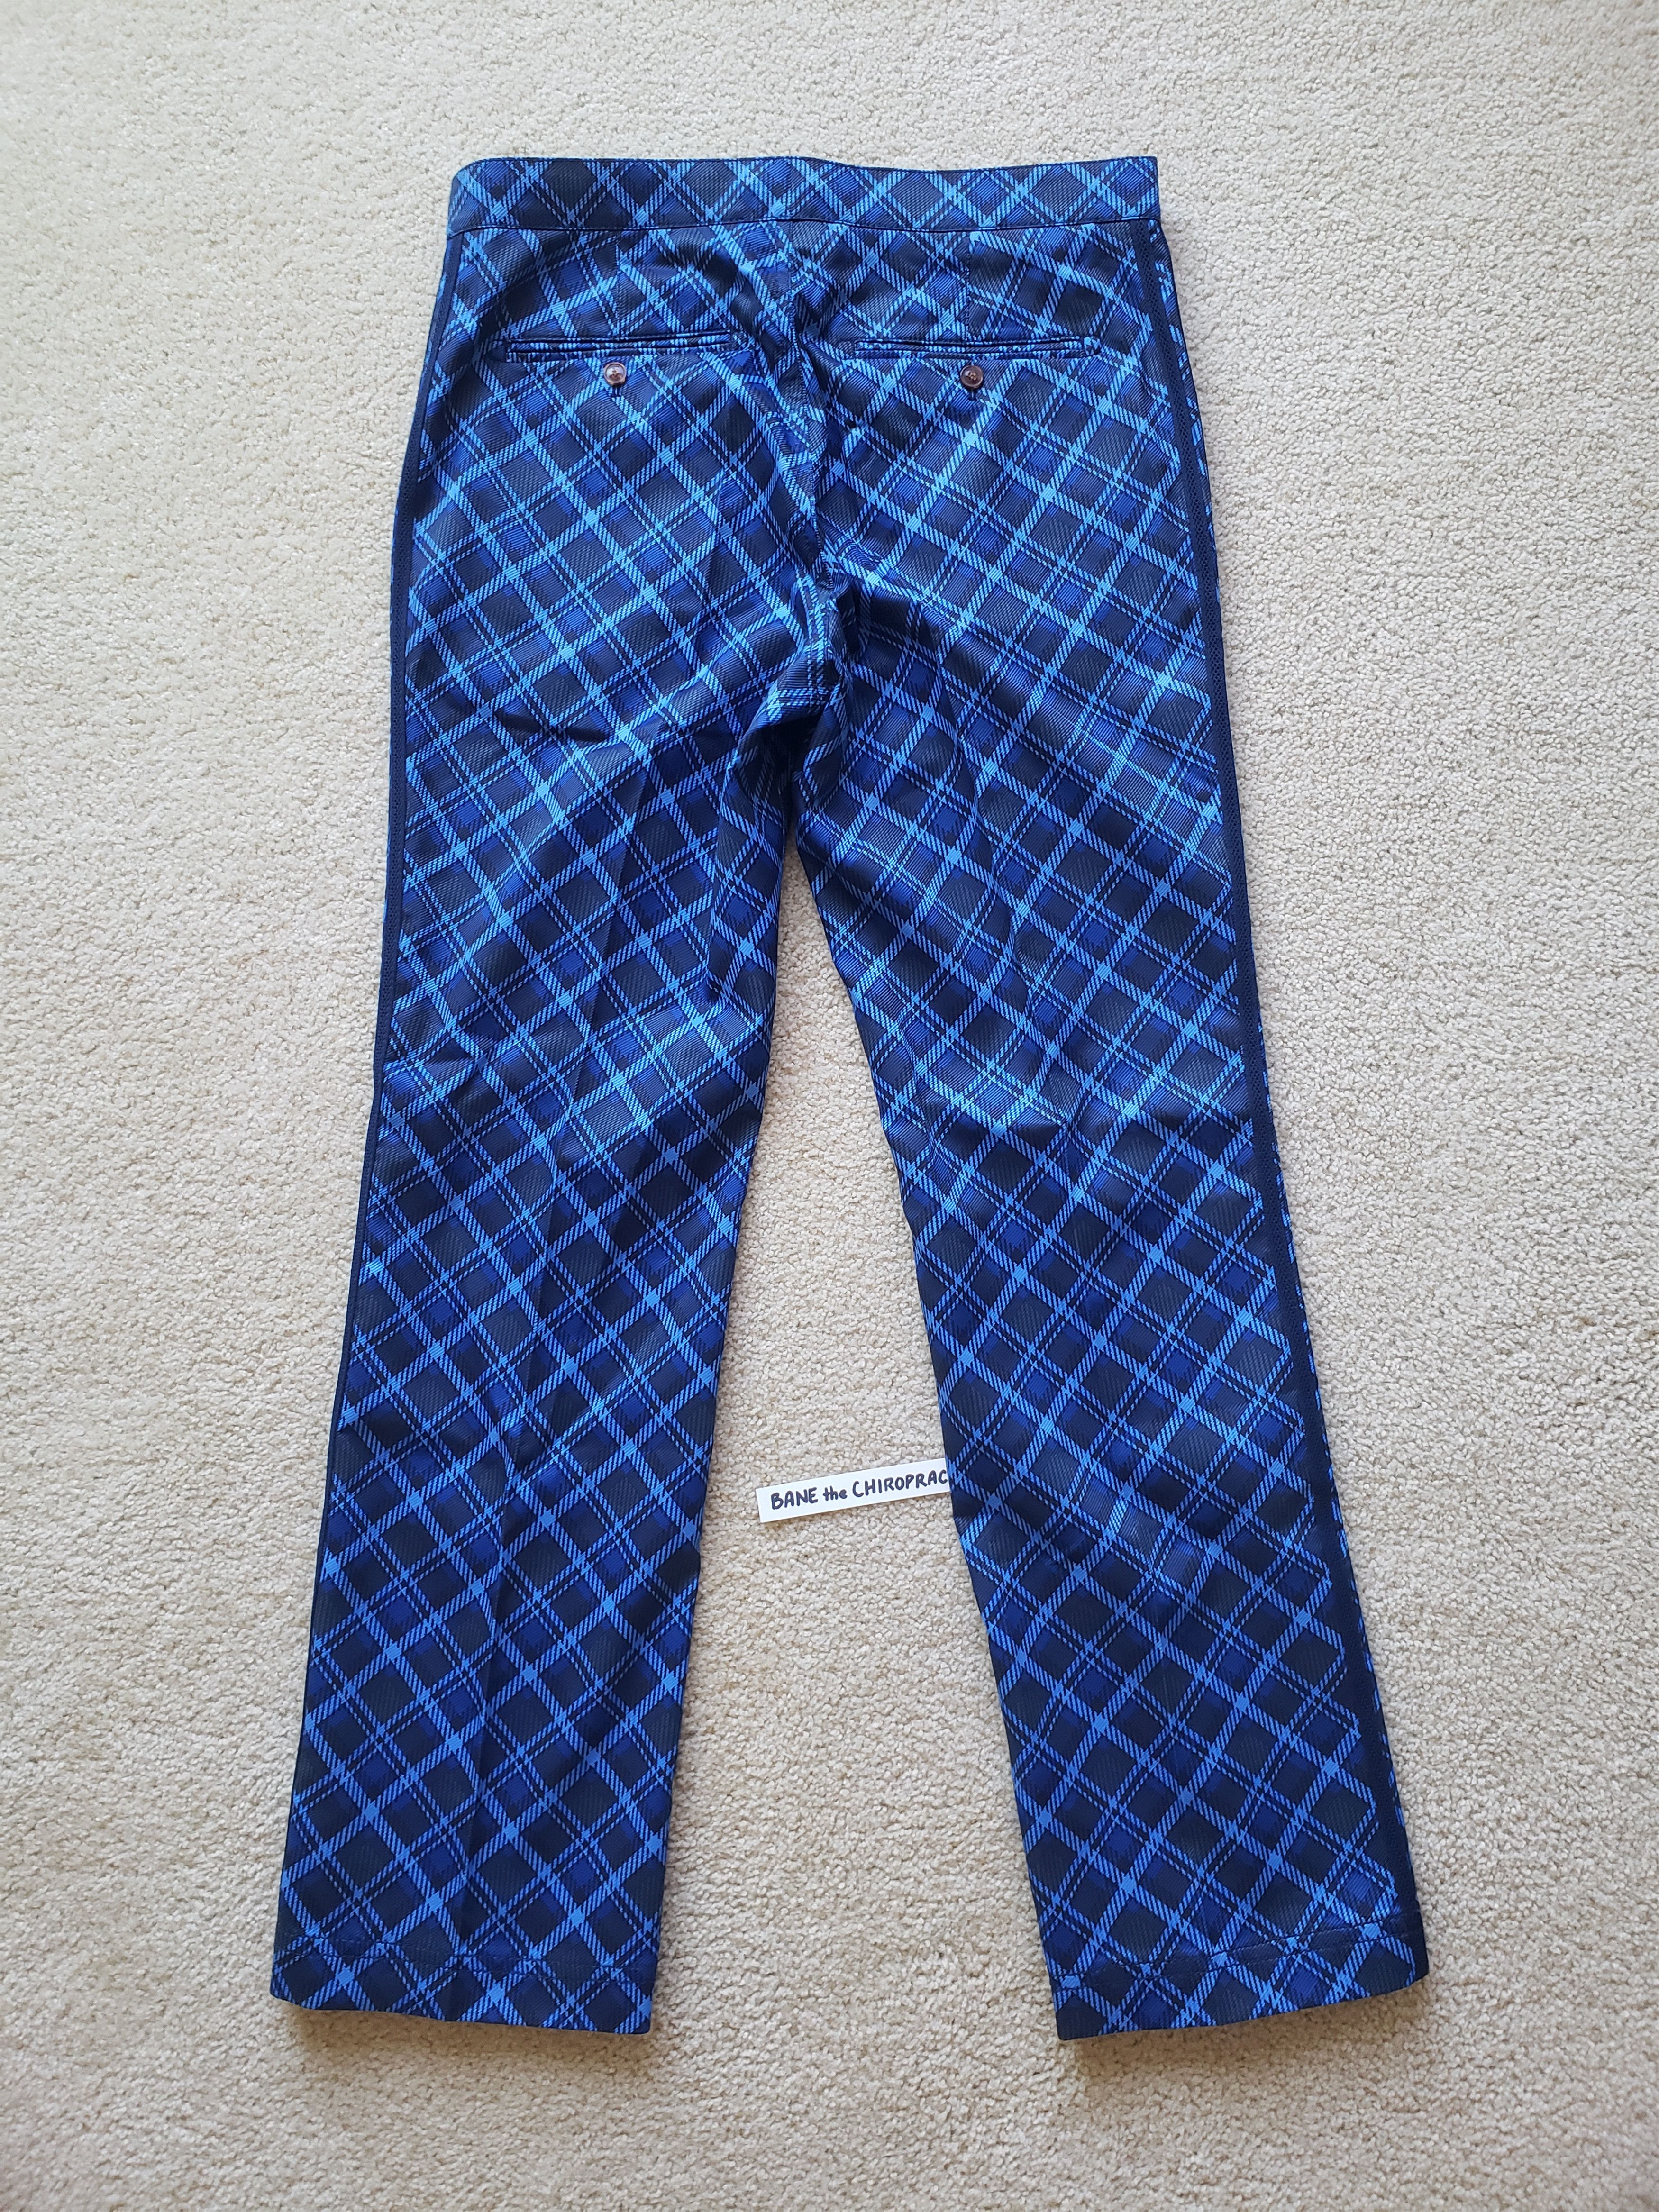 Adidas NEW ADIDAS x Wales Bonner Blue Tartan Track Pants L GU0753 Size US 36 / EU 52 - 2 Preview